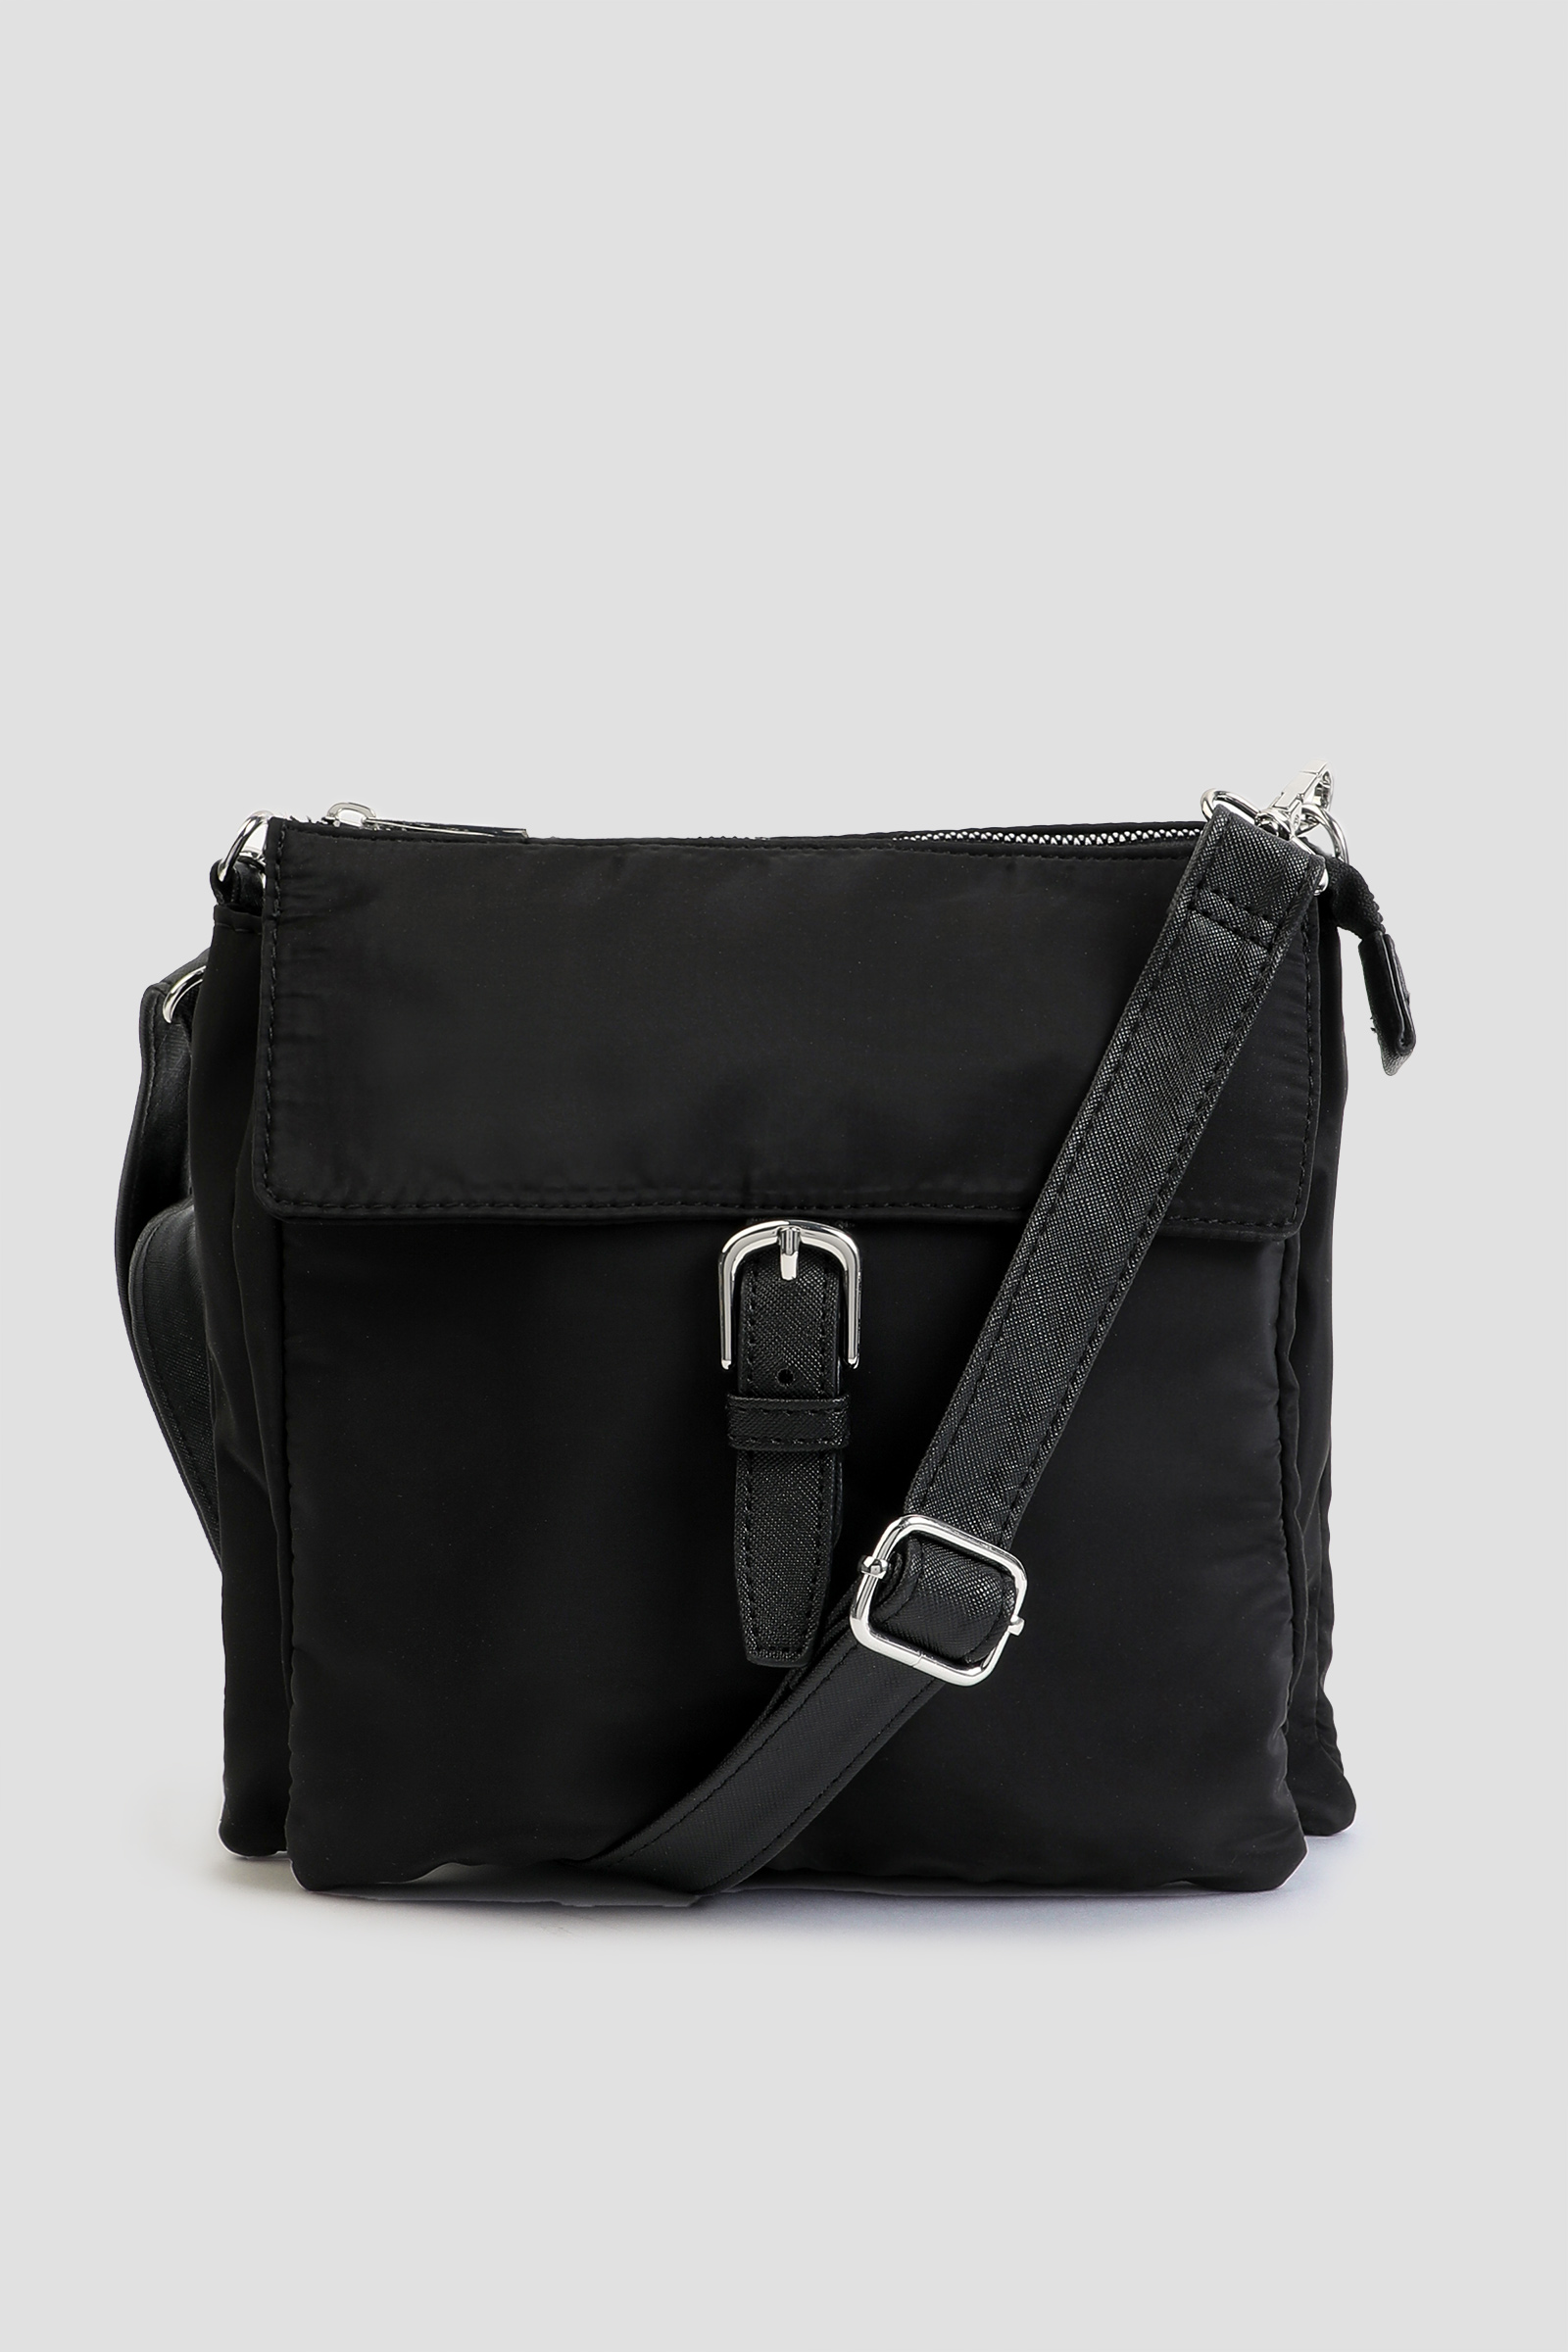 Ardene Black Nylon Crossbody Bag | 100% Recycled Polyester/Nylon | Eco-Conscious